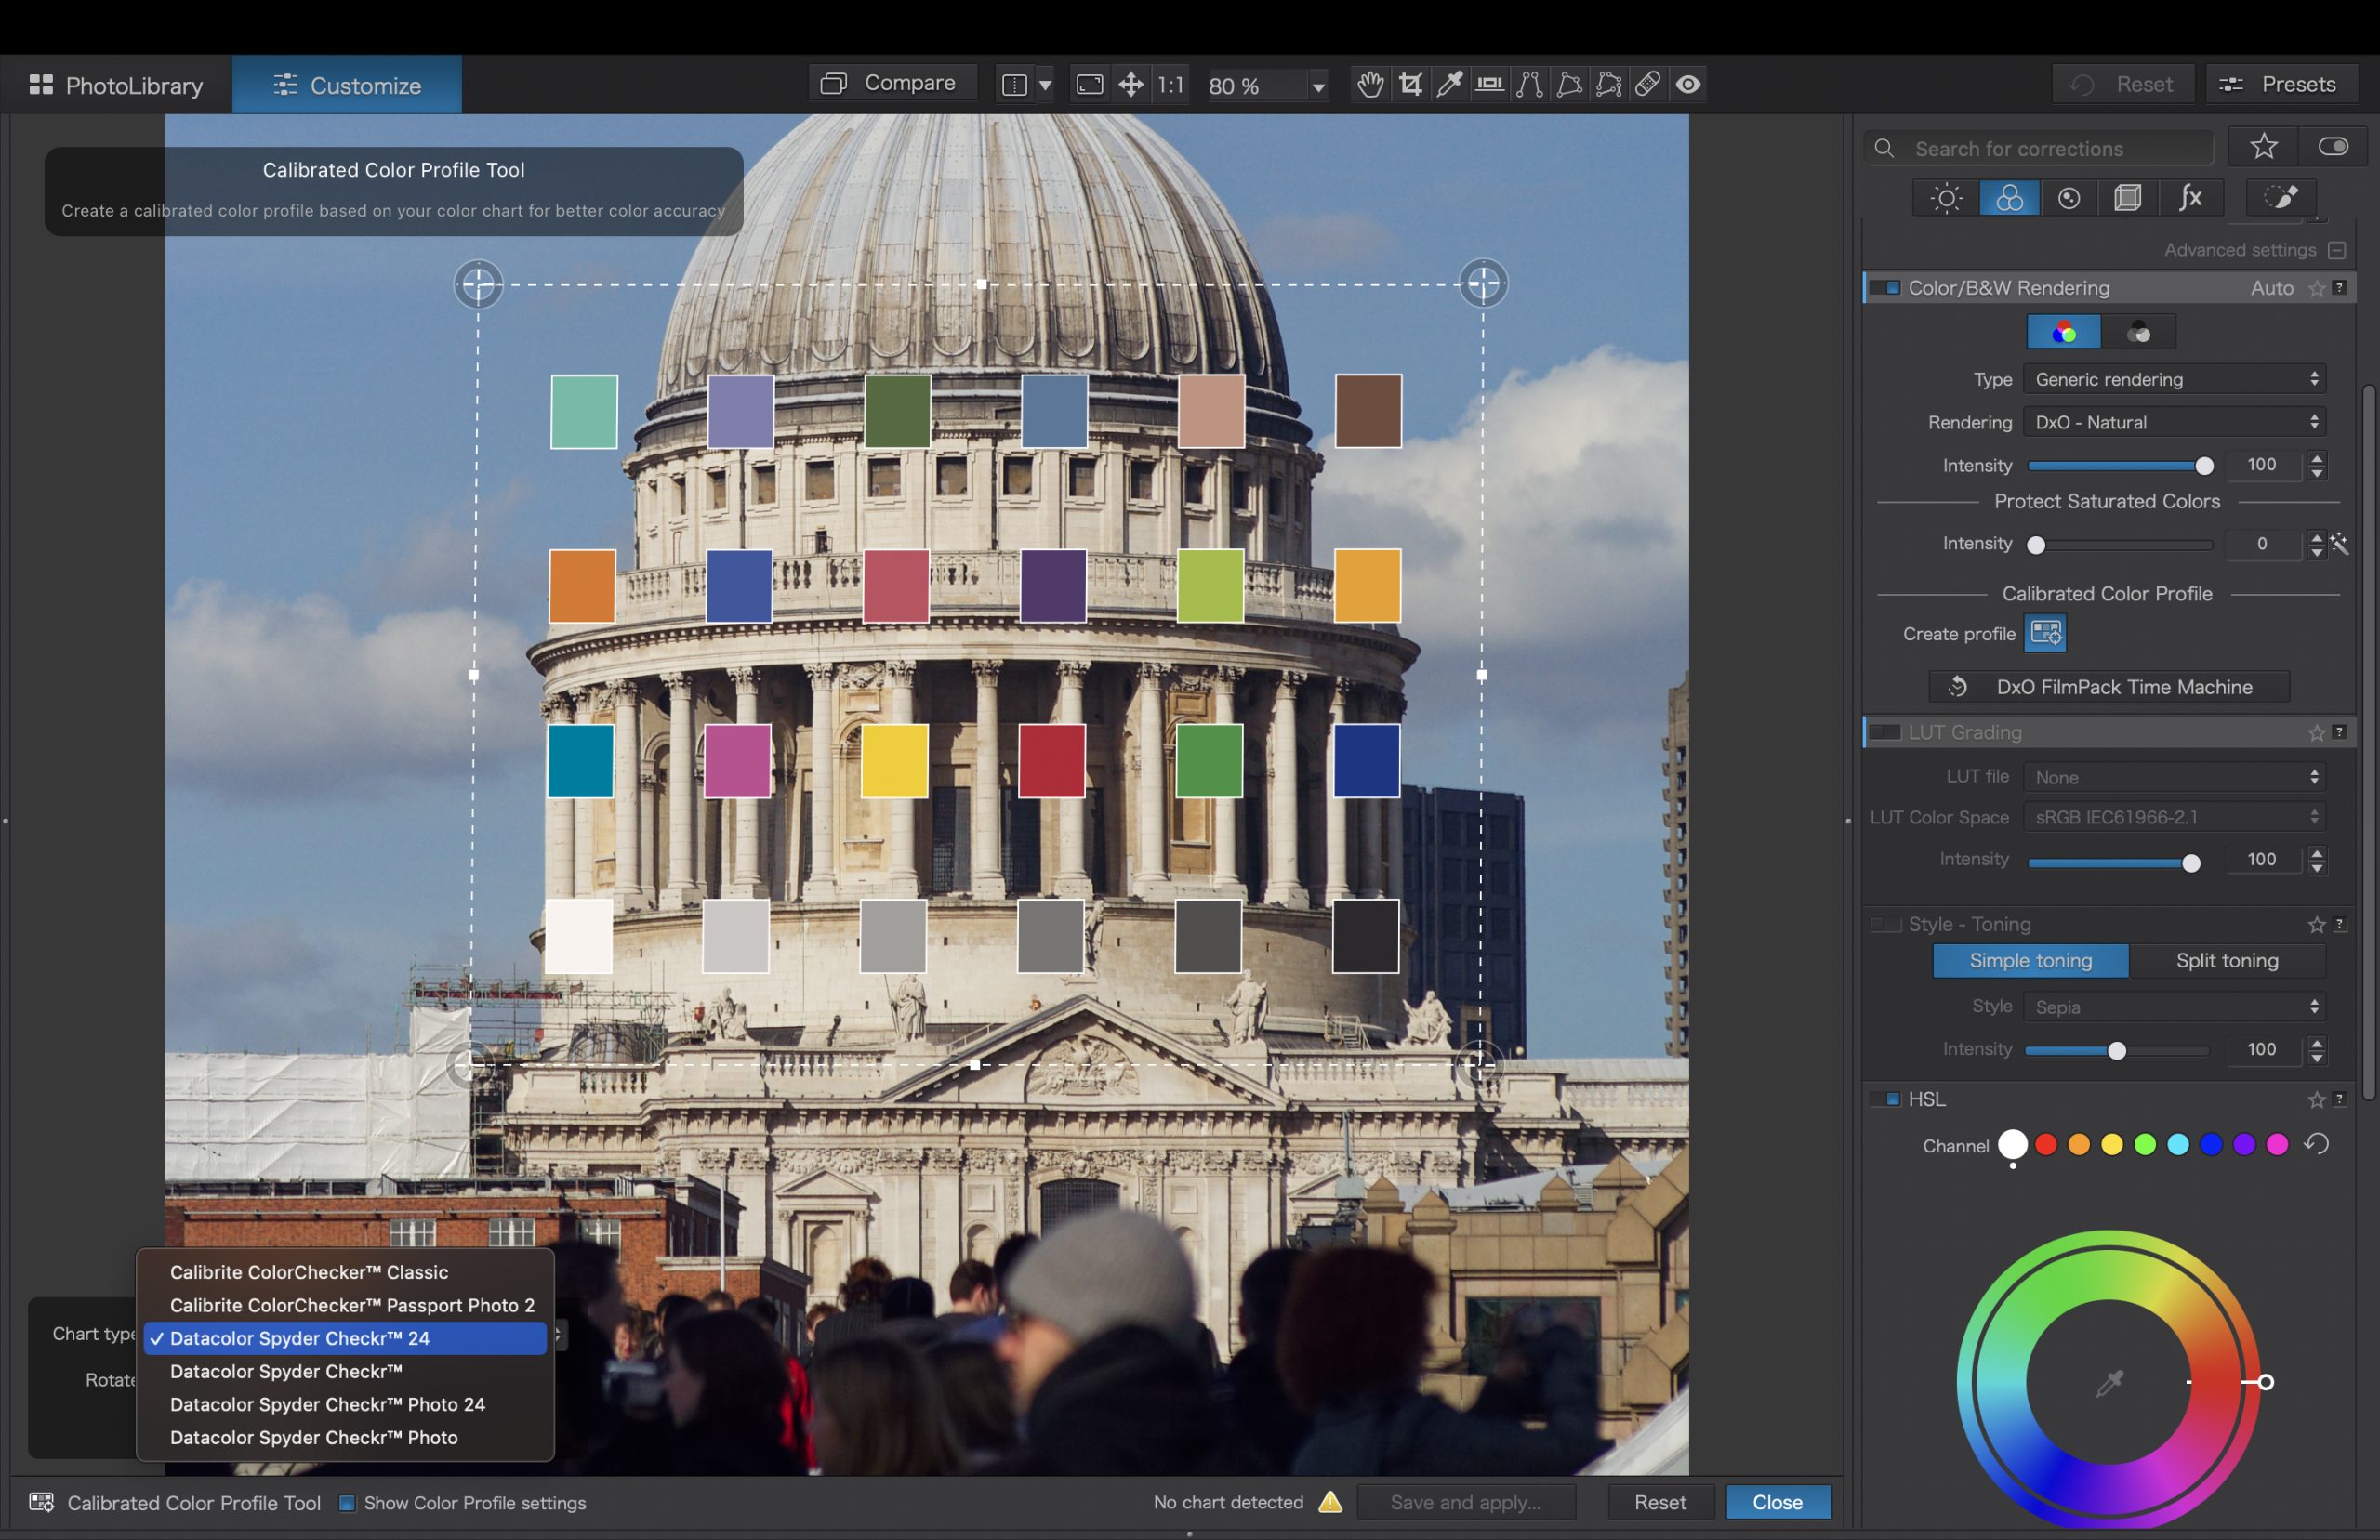 Adobe Photoshop CS6 - Color Picker with DxO PhotoLab 7.